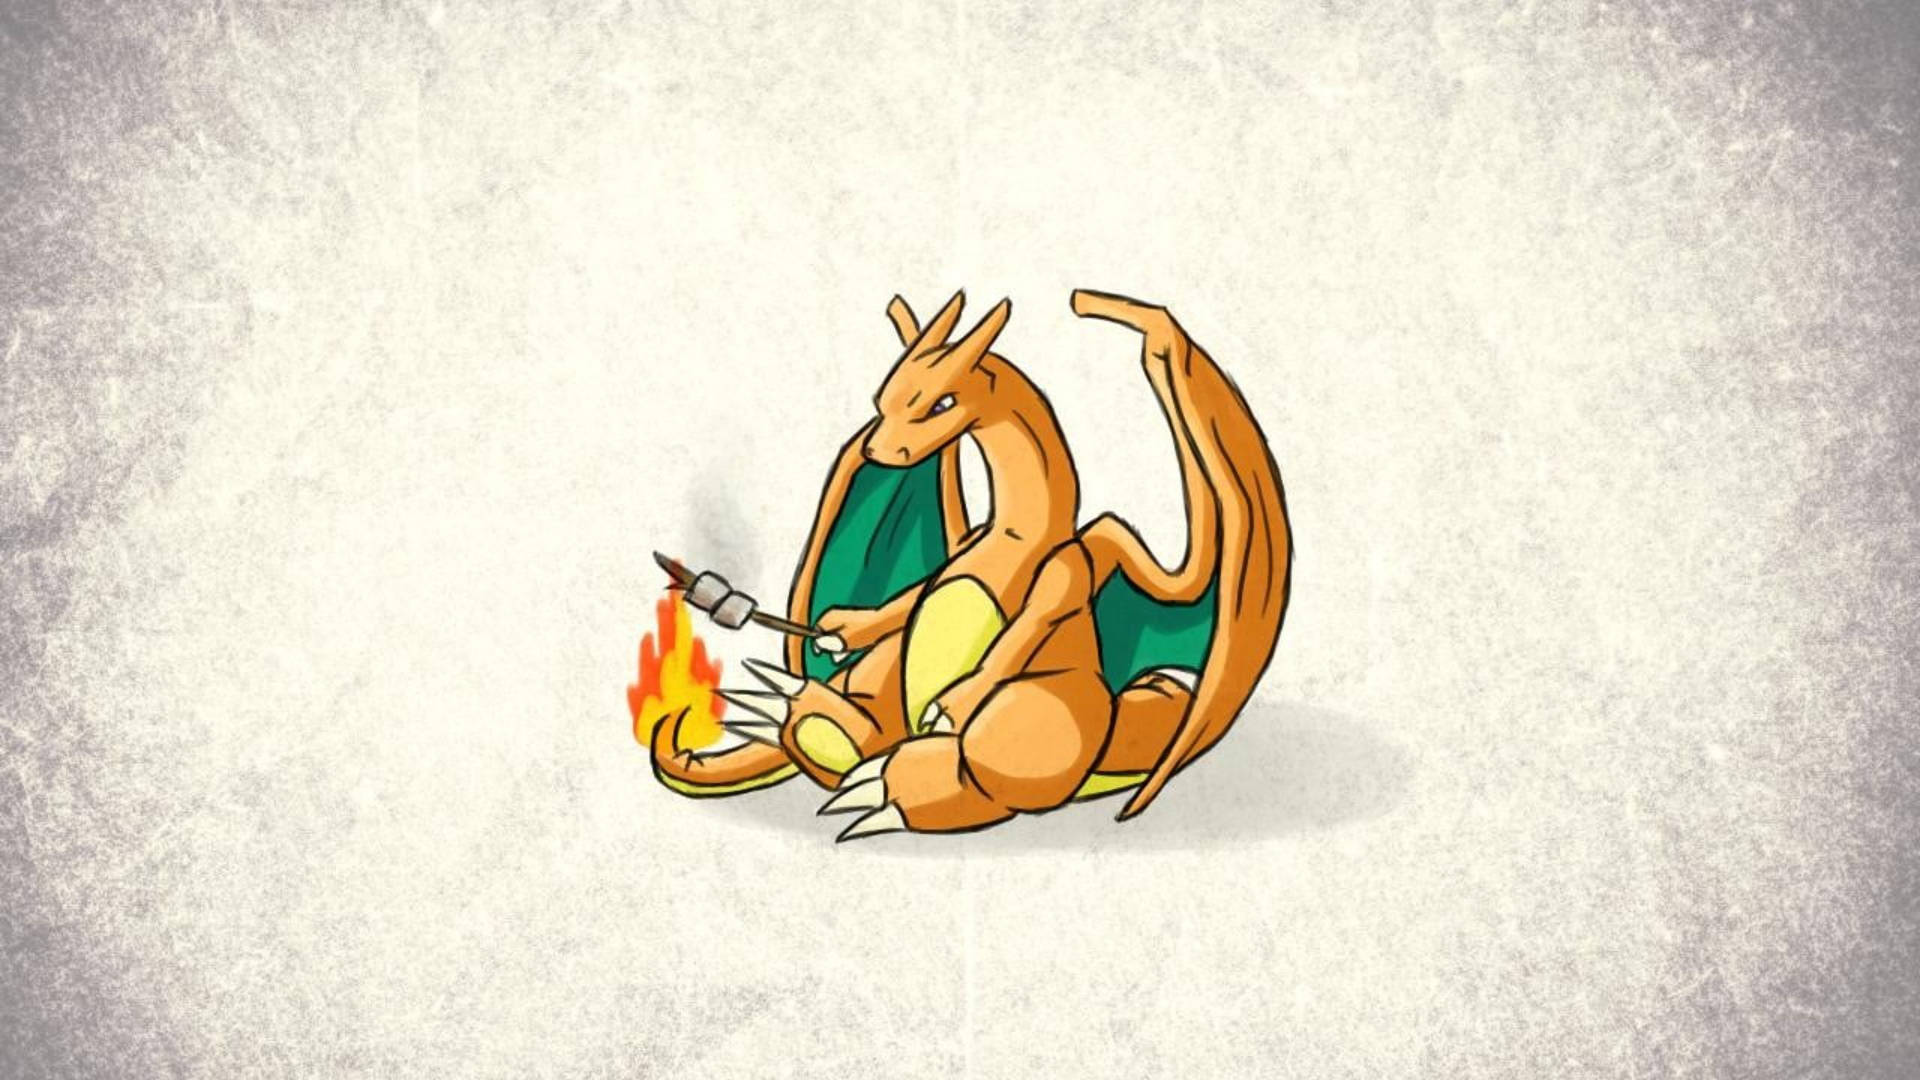 Charizard, The Fire-type Pokemon, Toasting Marshmallows Background